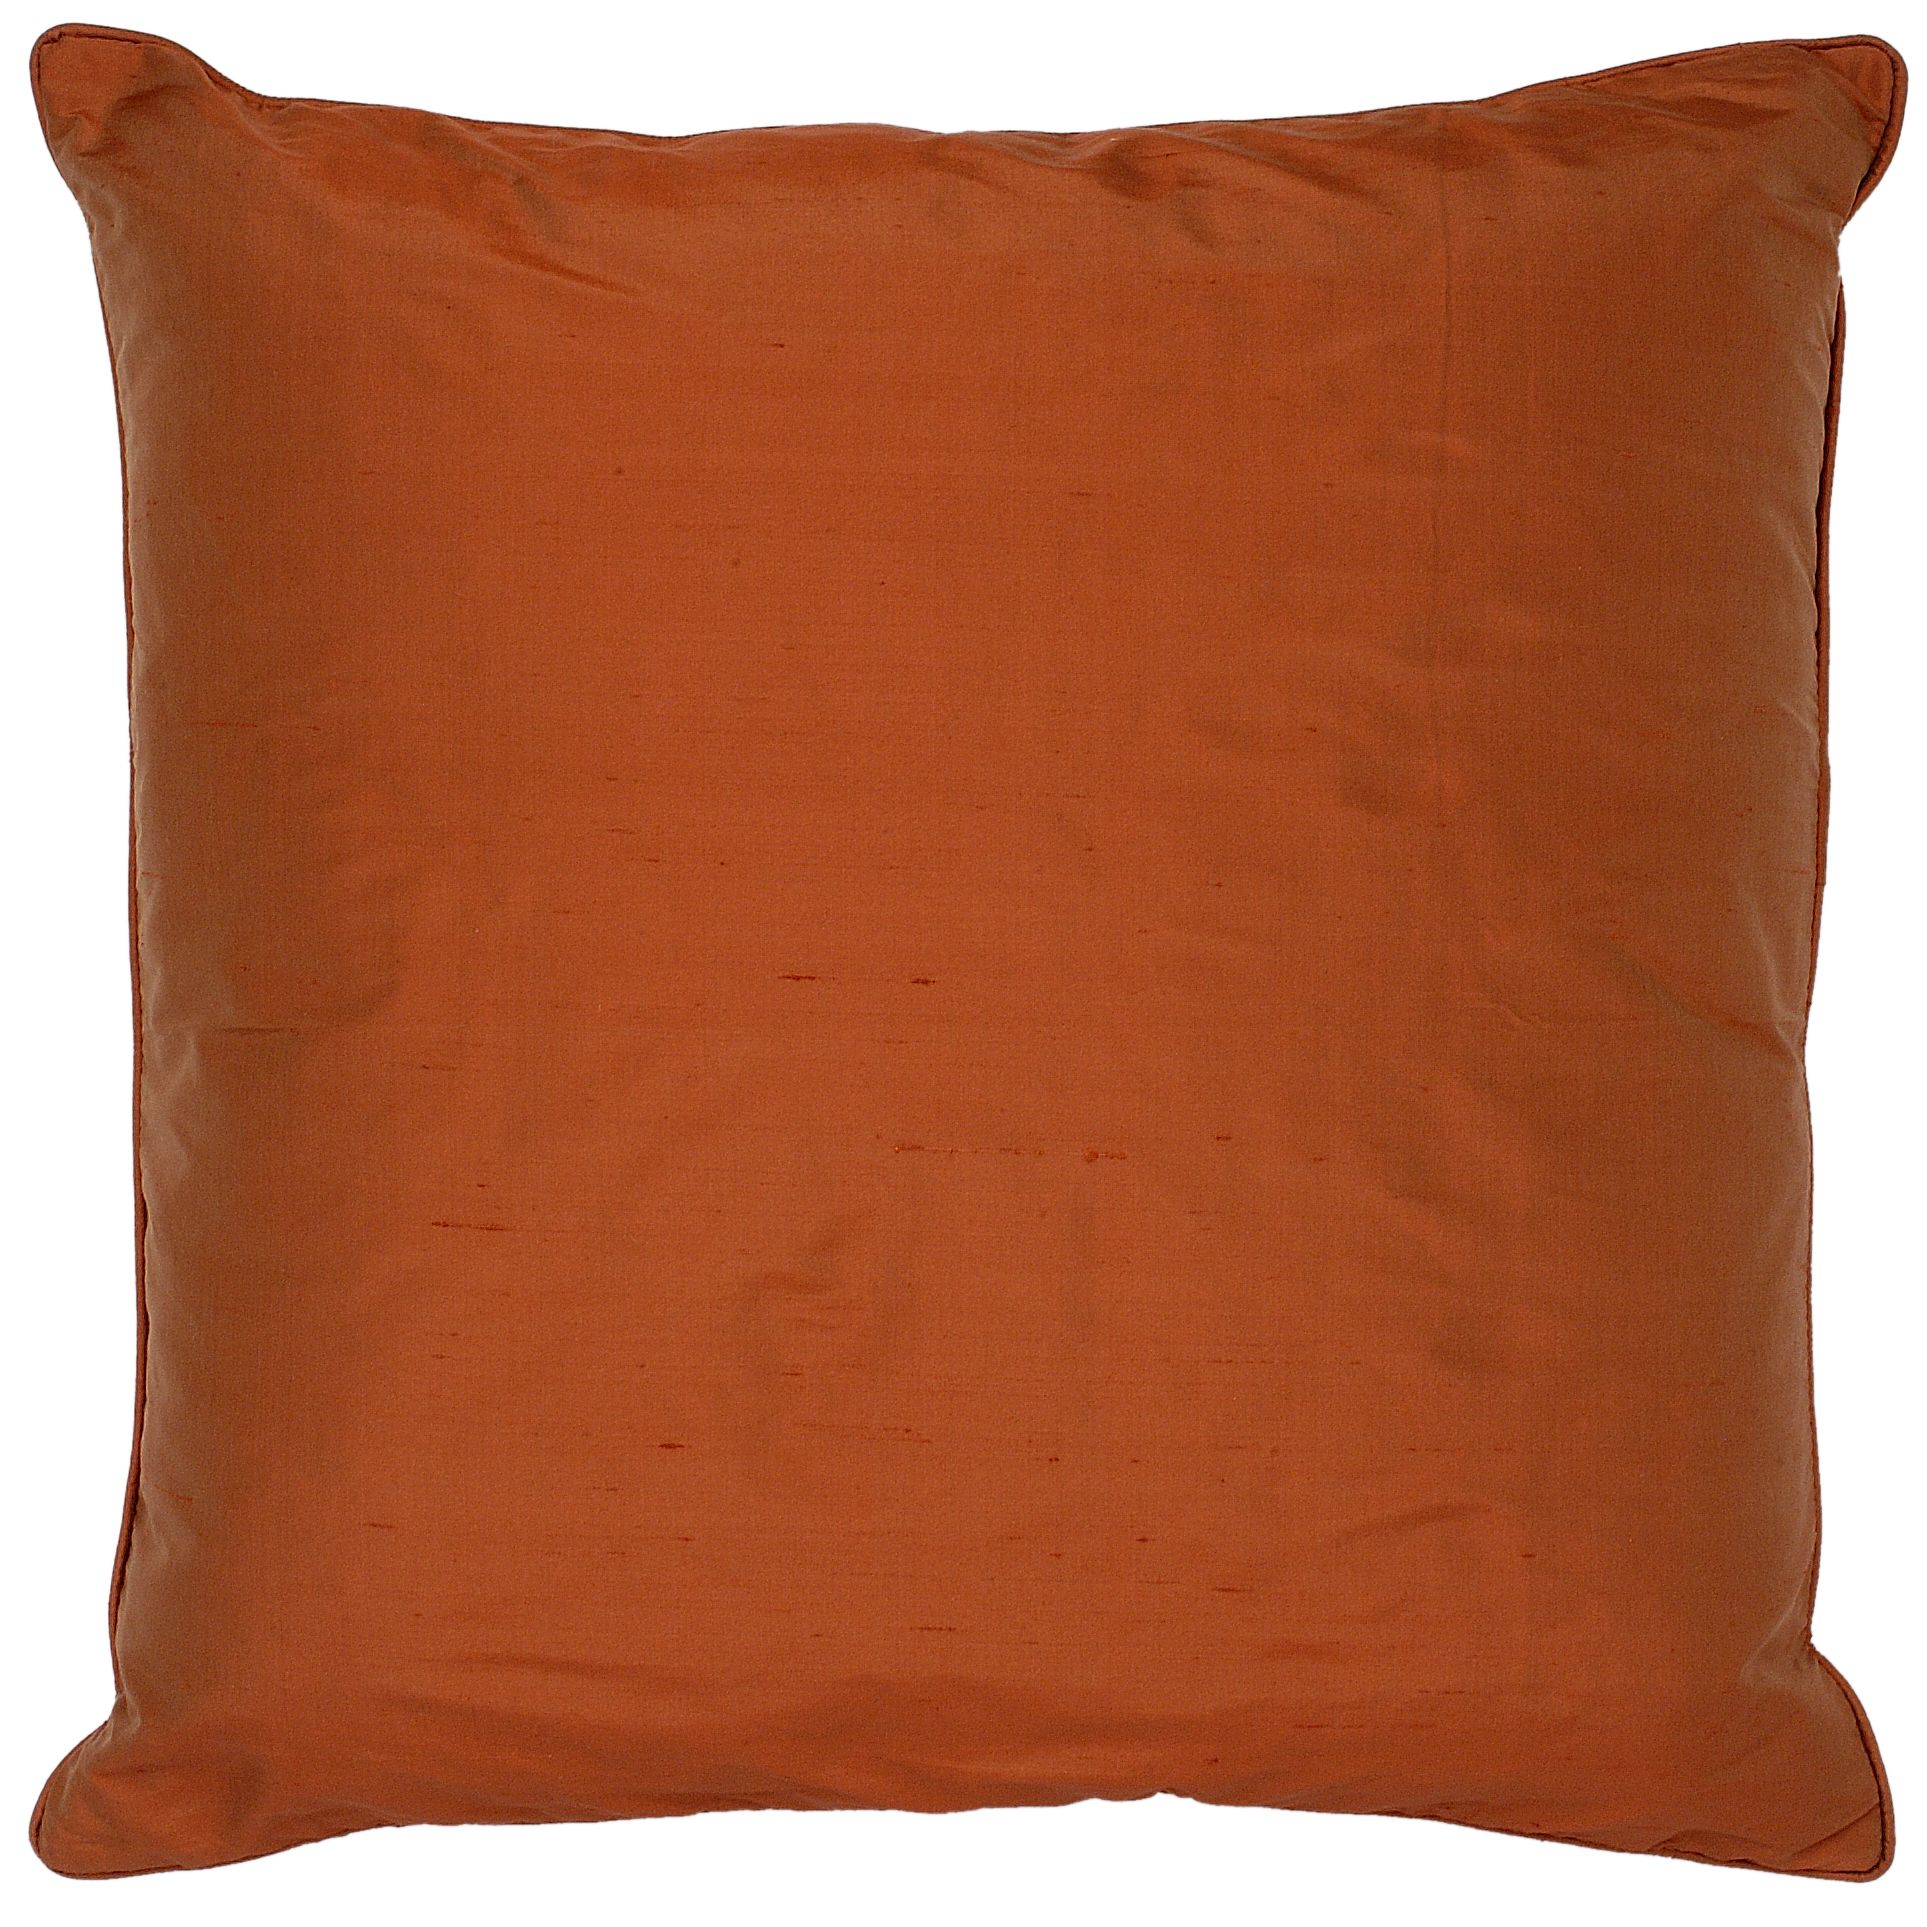 John Lewis Silk Cushion, Terracotta, One size